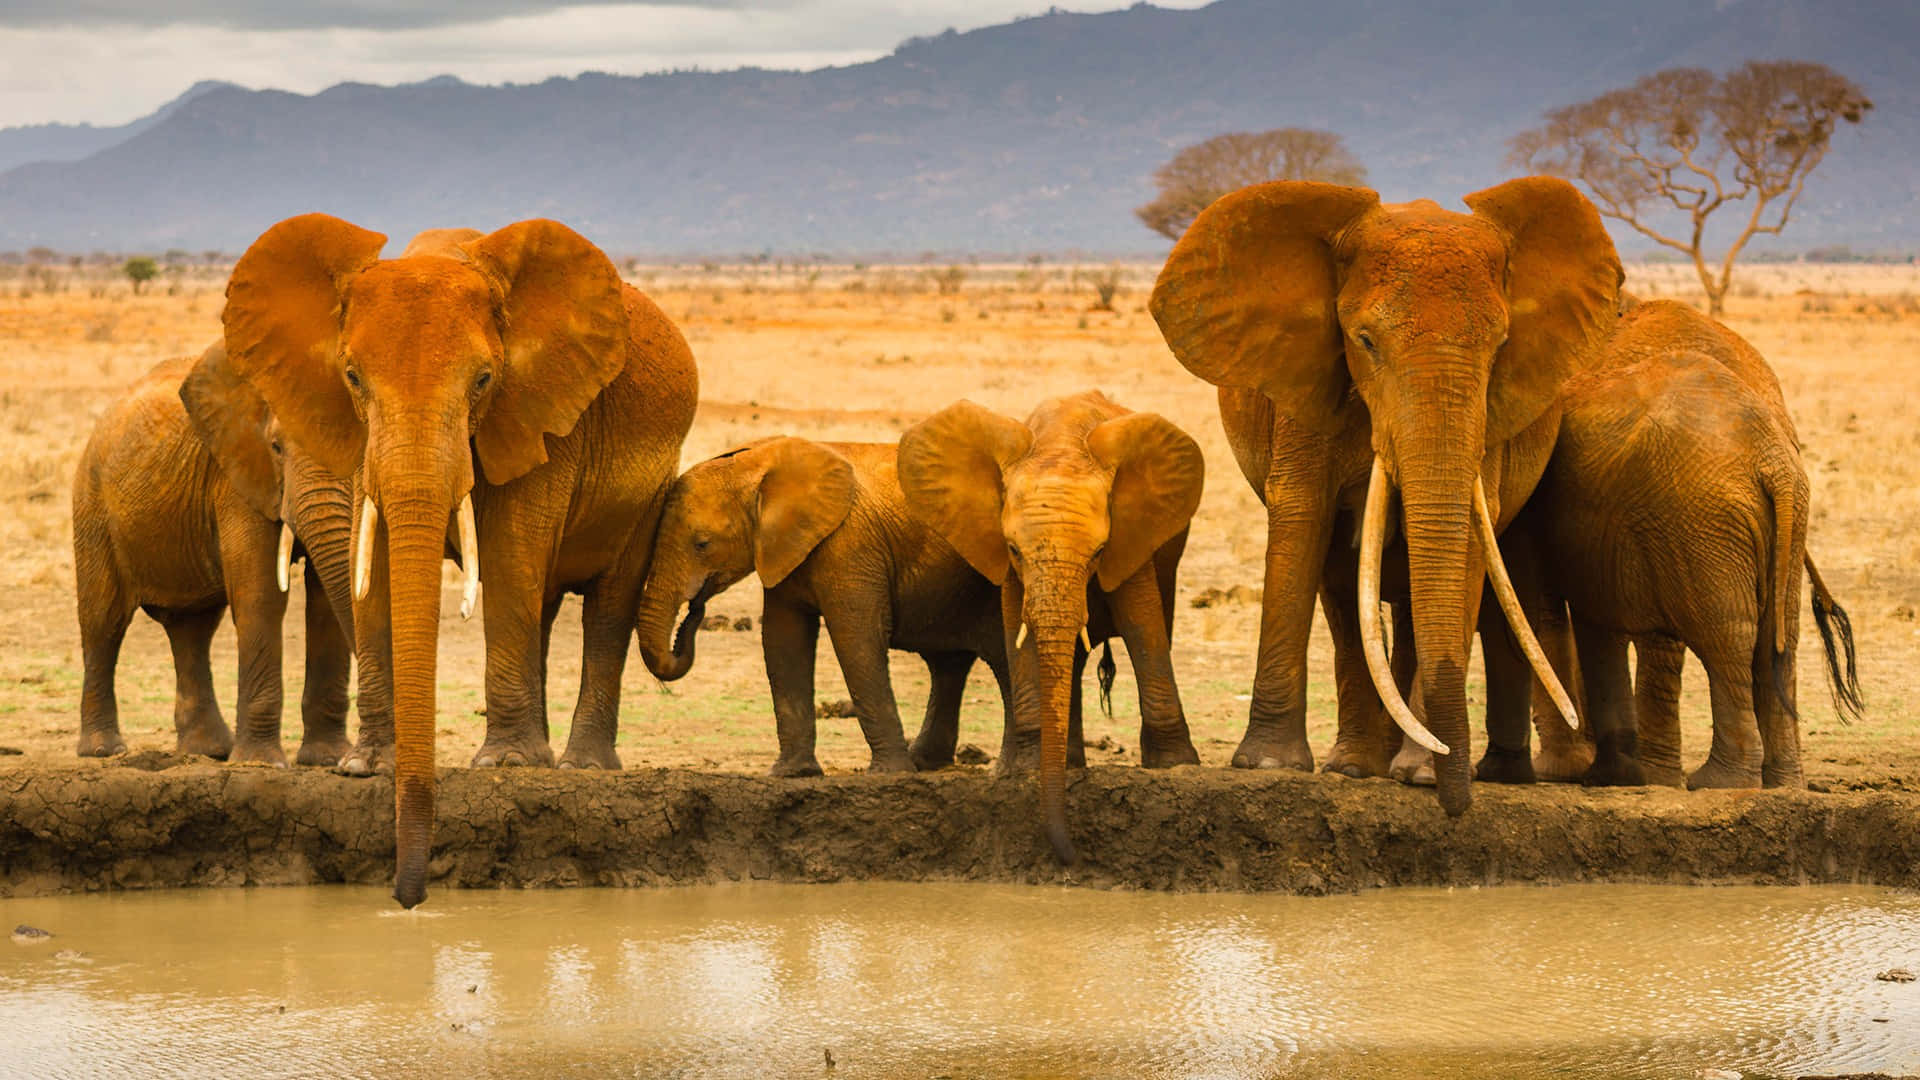 Safari Lion Elephants African Wildlife Picture